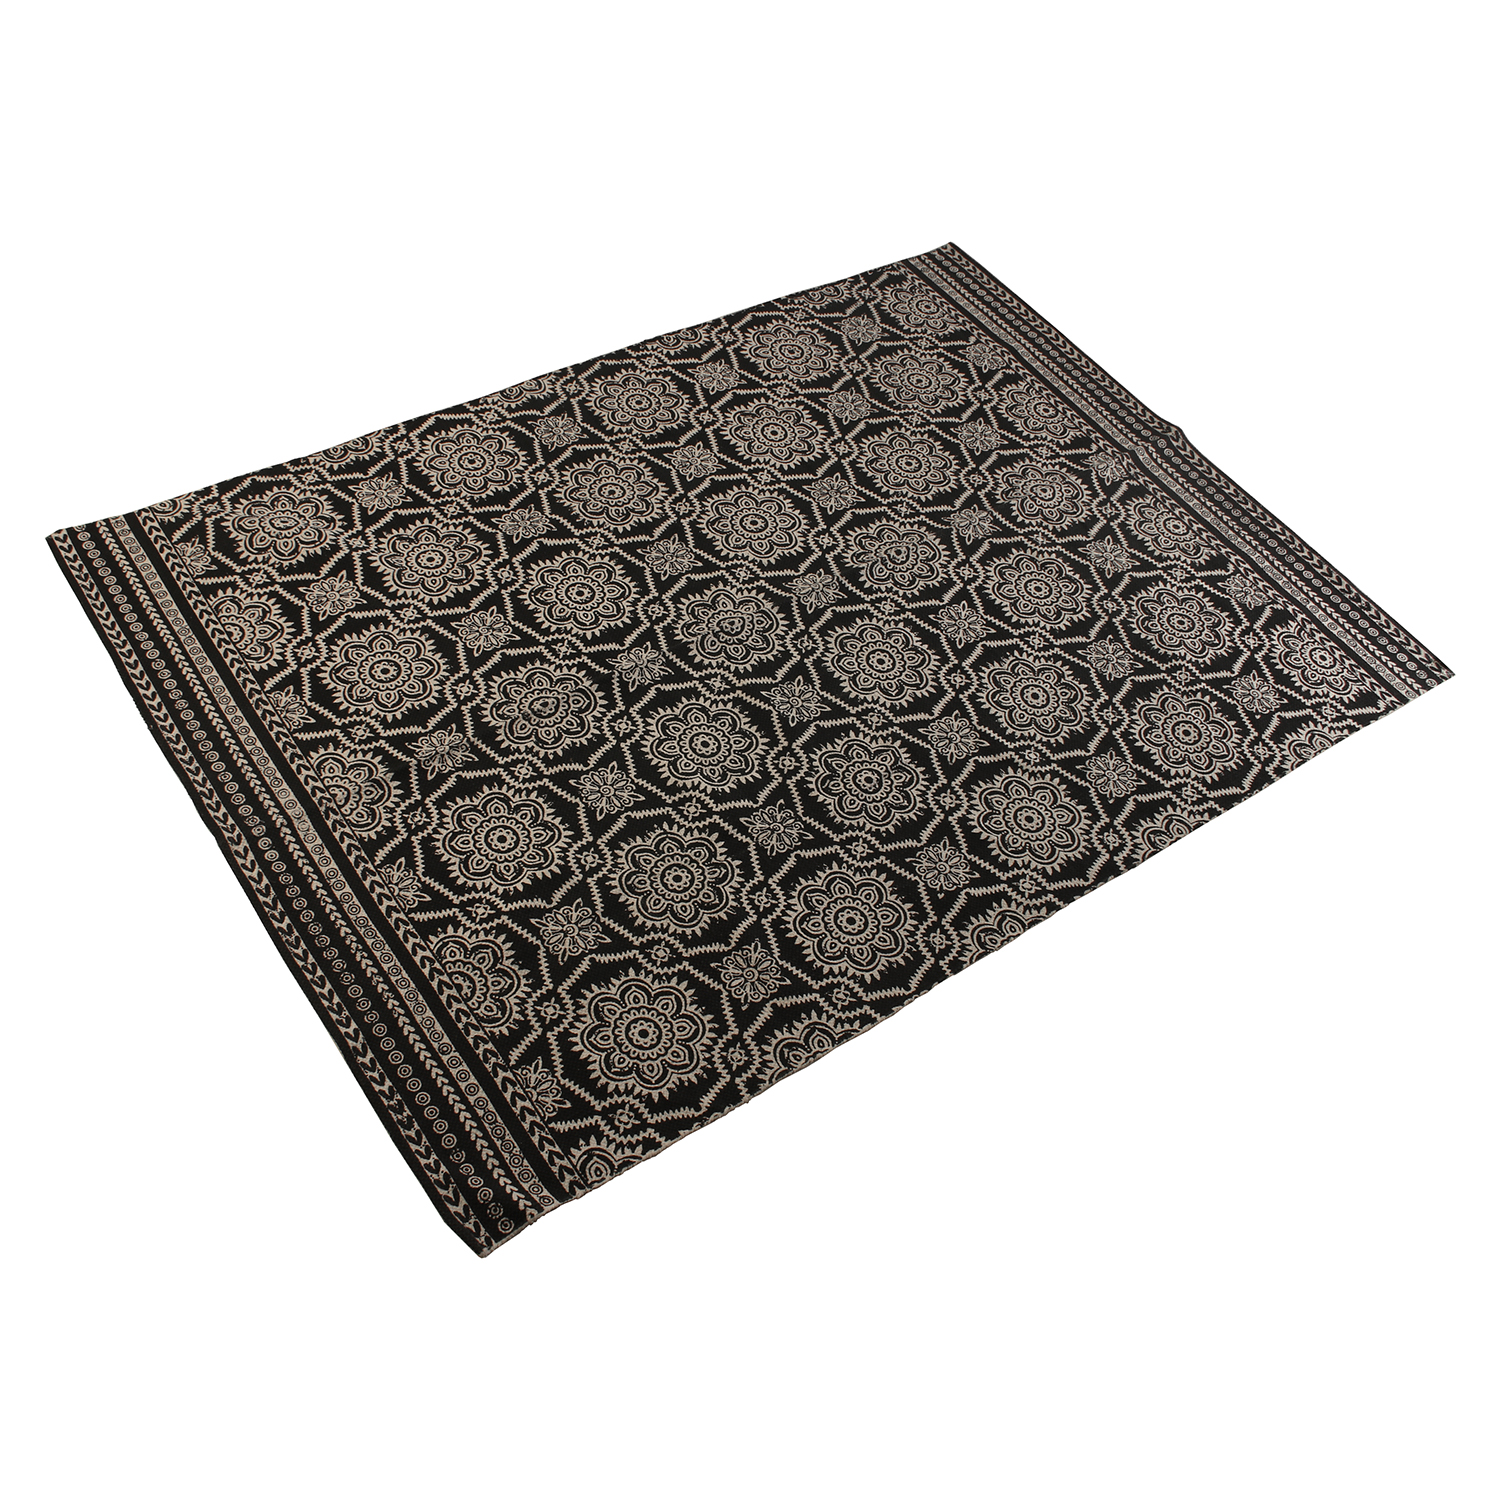 31849-alfombra-algodon-impresa-140x200cm.gif